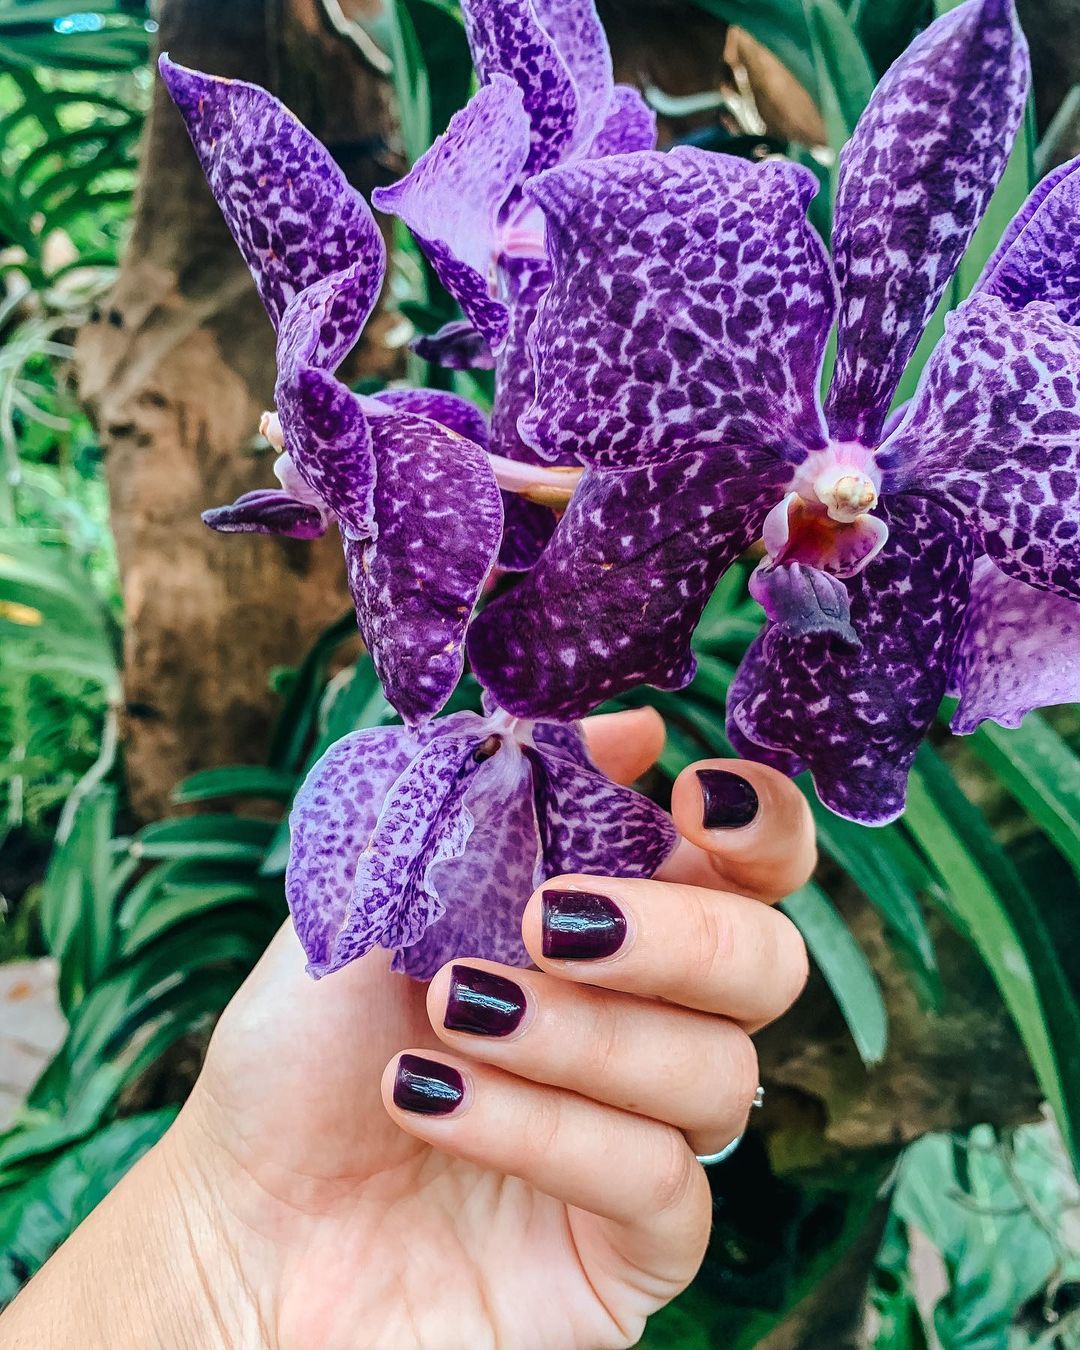 singapore botanic gardens - National Orchid Garden - flower